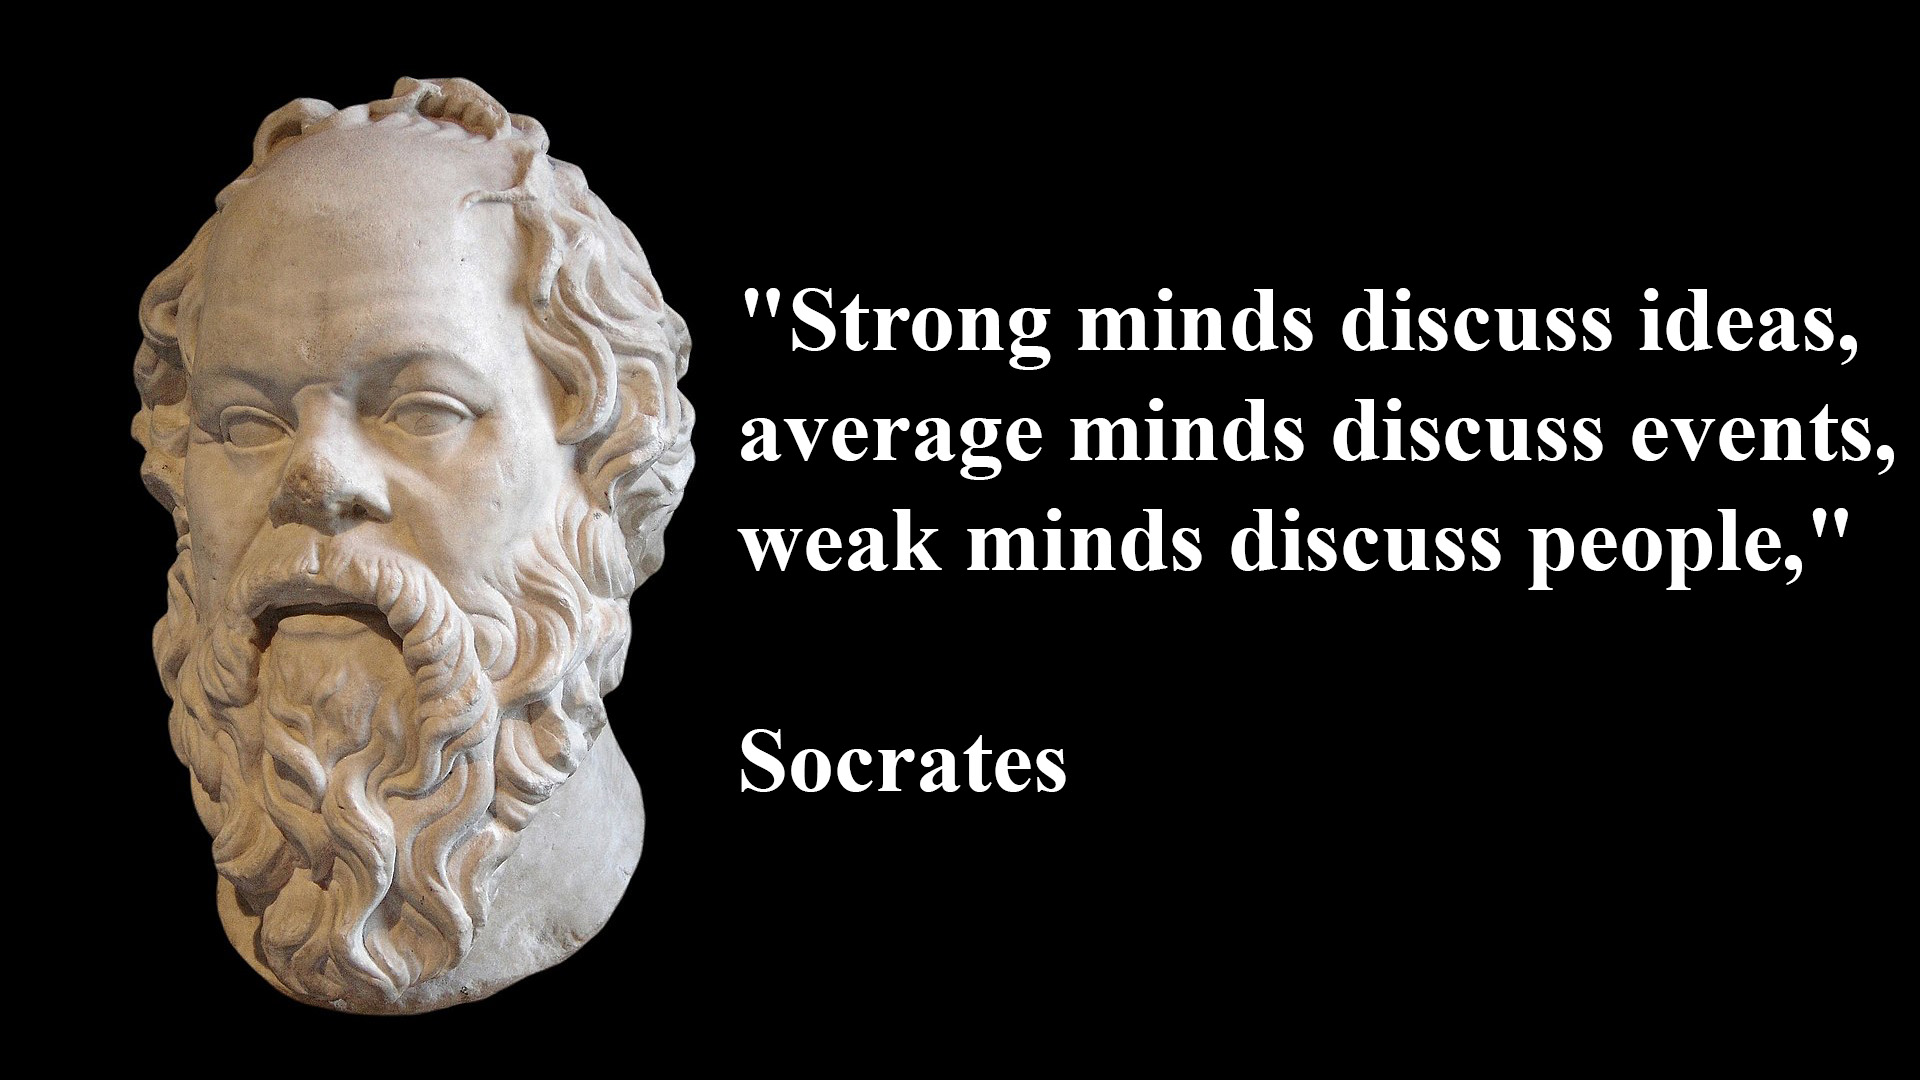 "Strong minds discuss ideas, average minds discuss events, weak minds discuss people